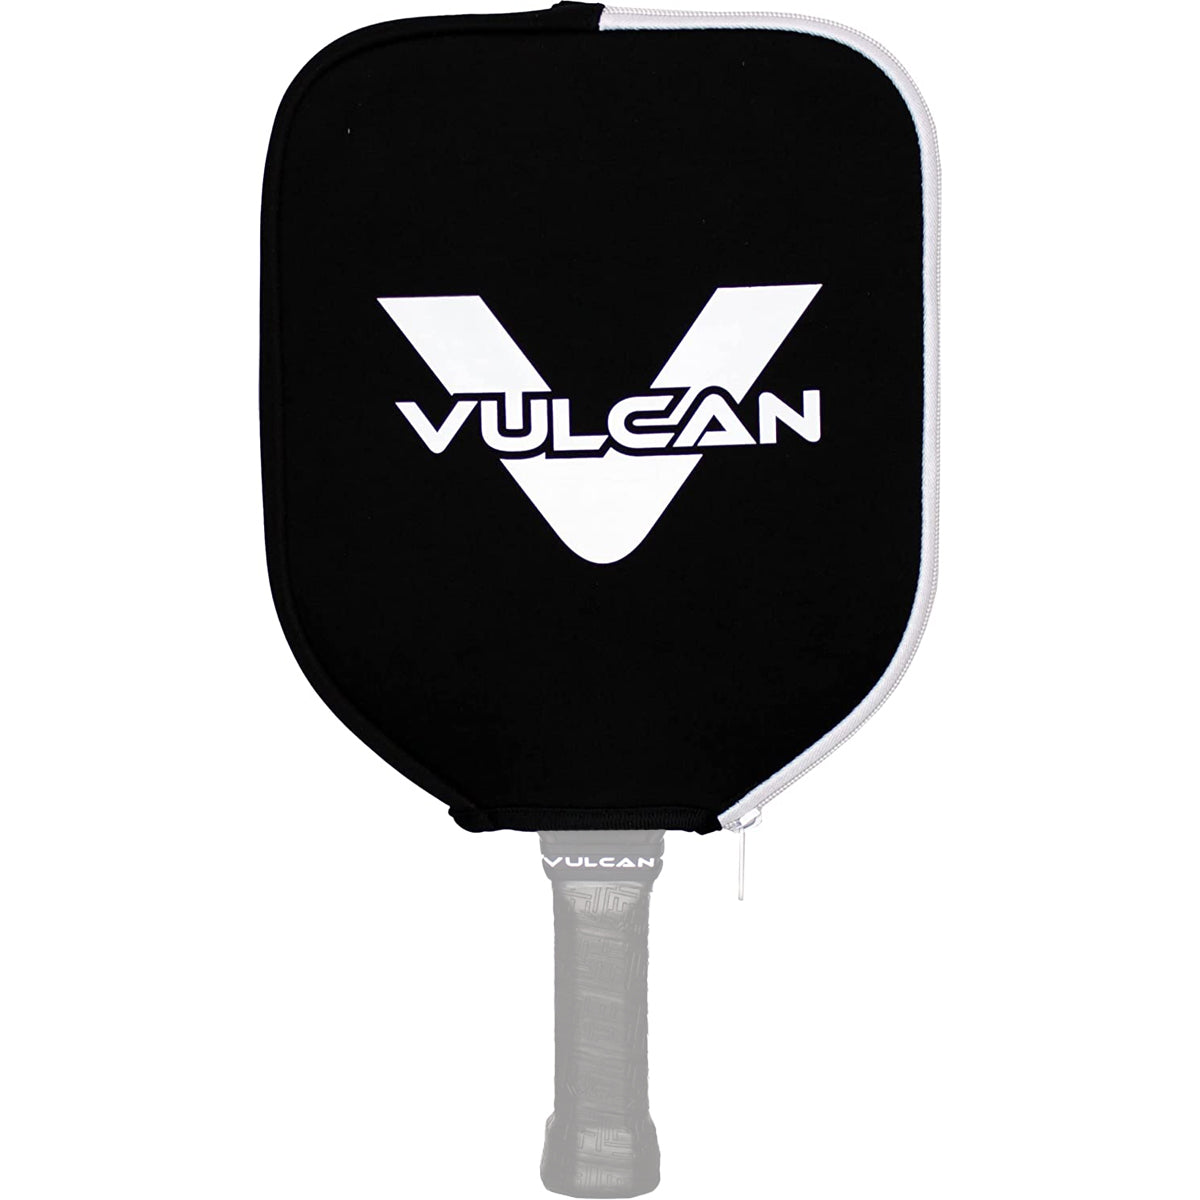 Vulcan Pickleball Paddle Cover - Black Vulcan